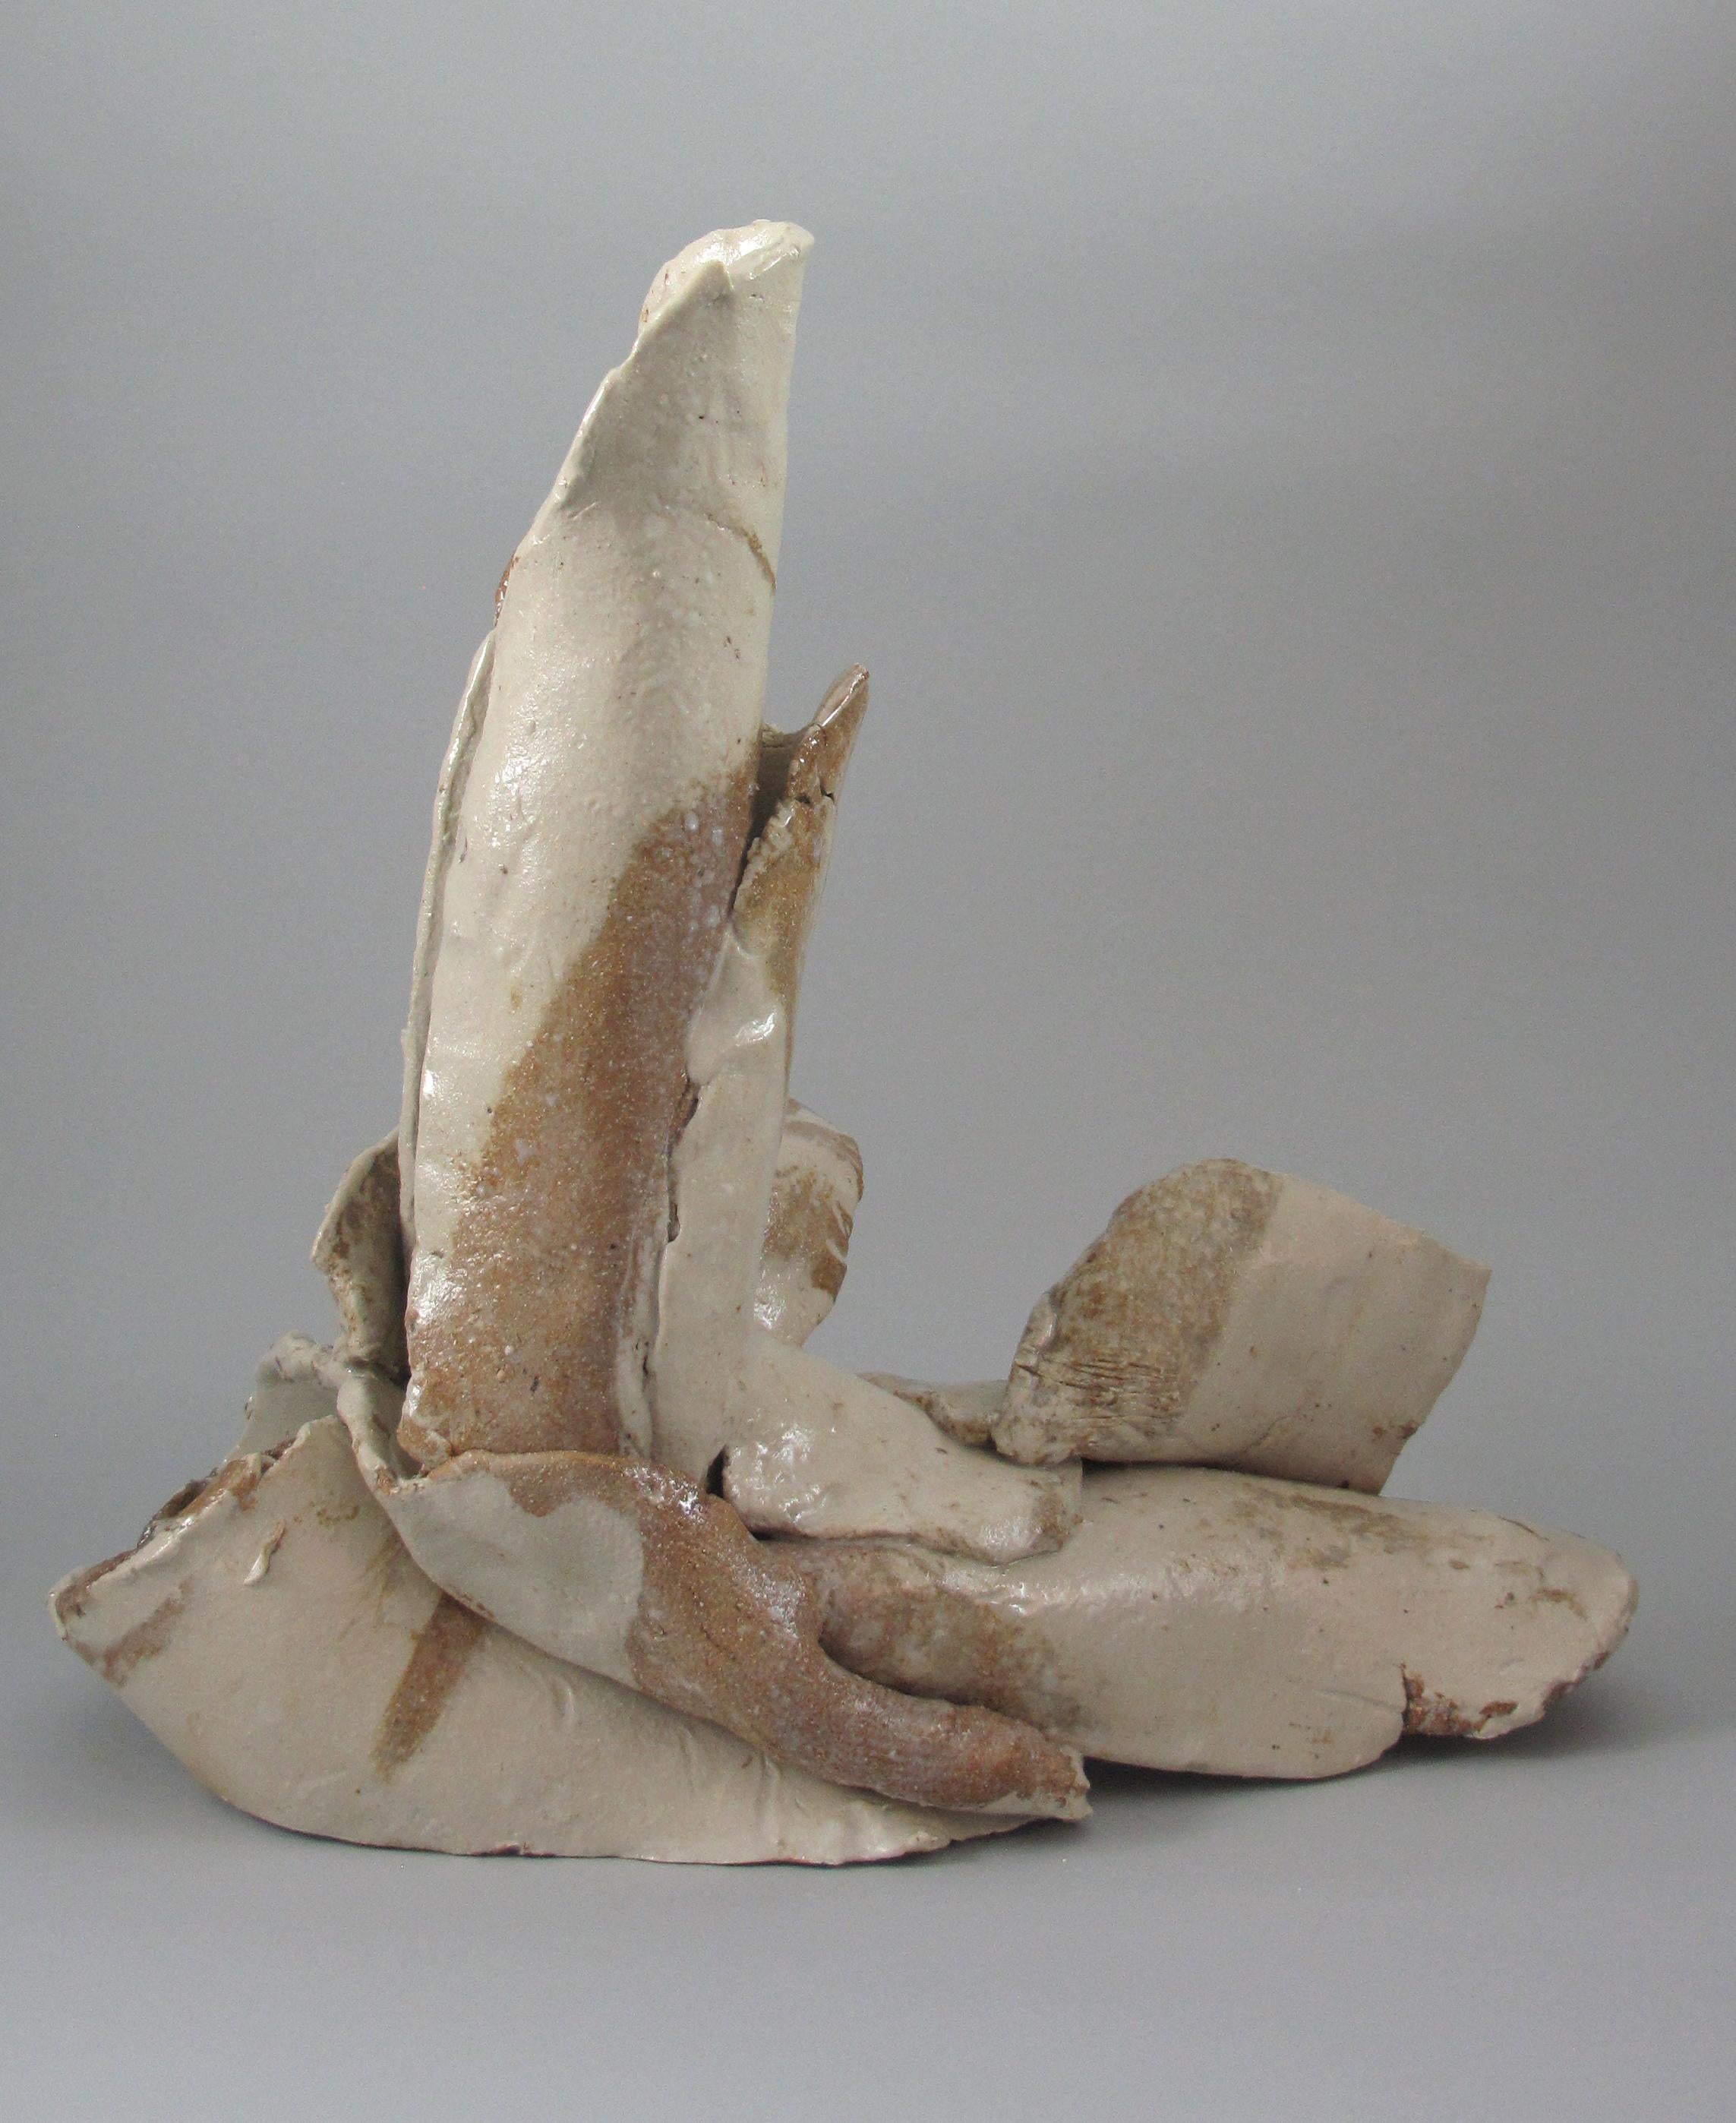 Abstract Sculpture Sara Fine-Wilson - « Fragment », gestuel, céramique, sculpture, blanc, marron, grès